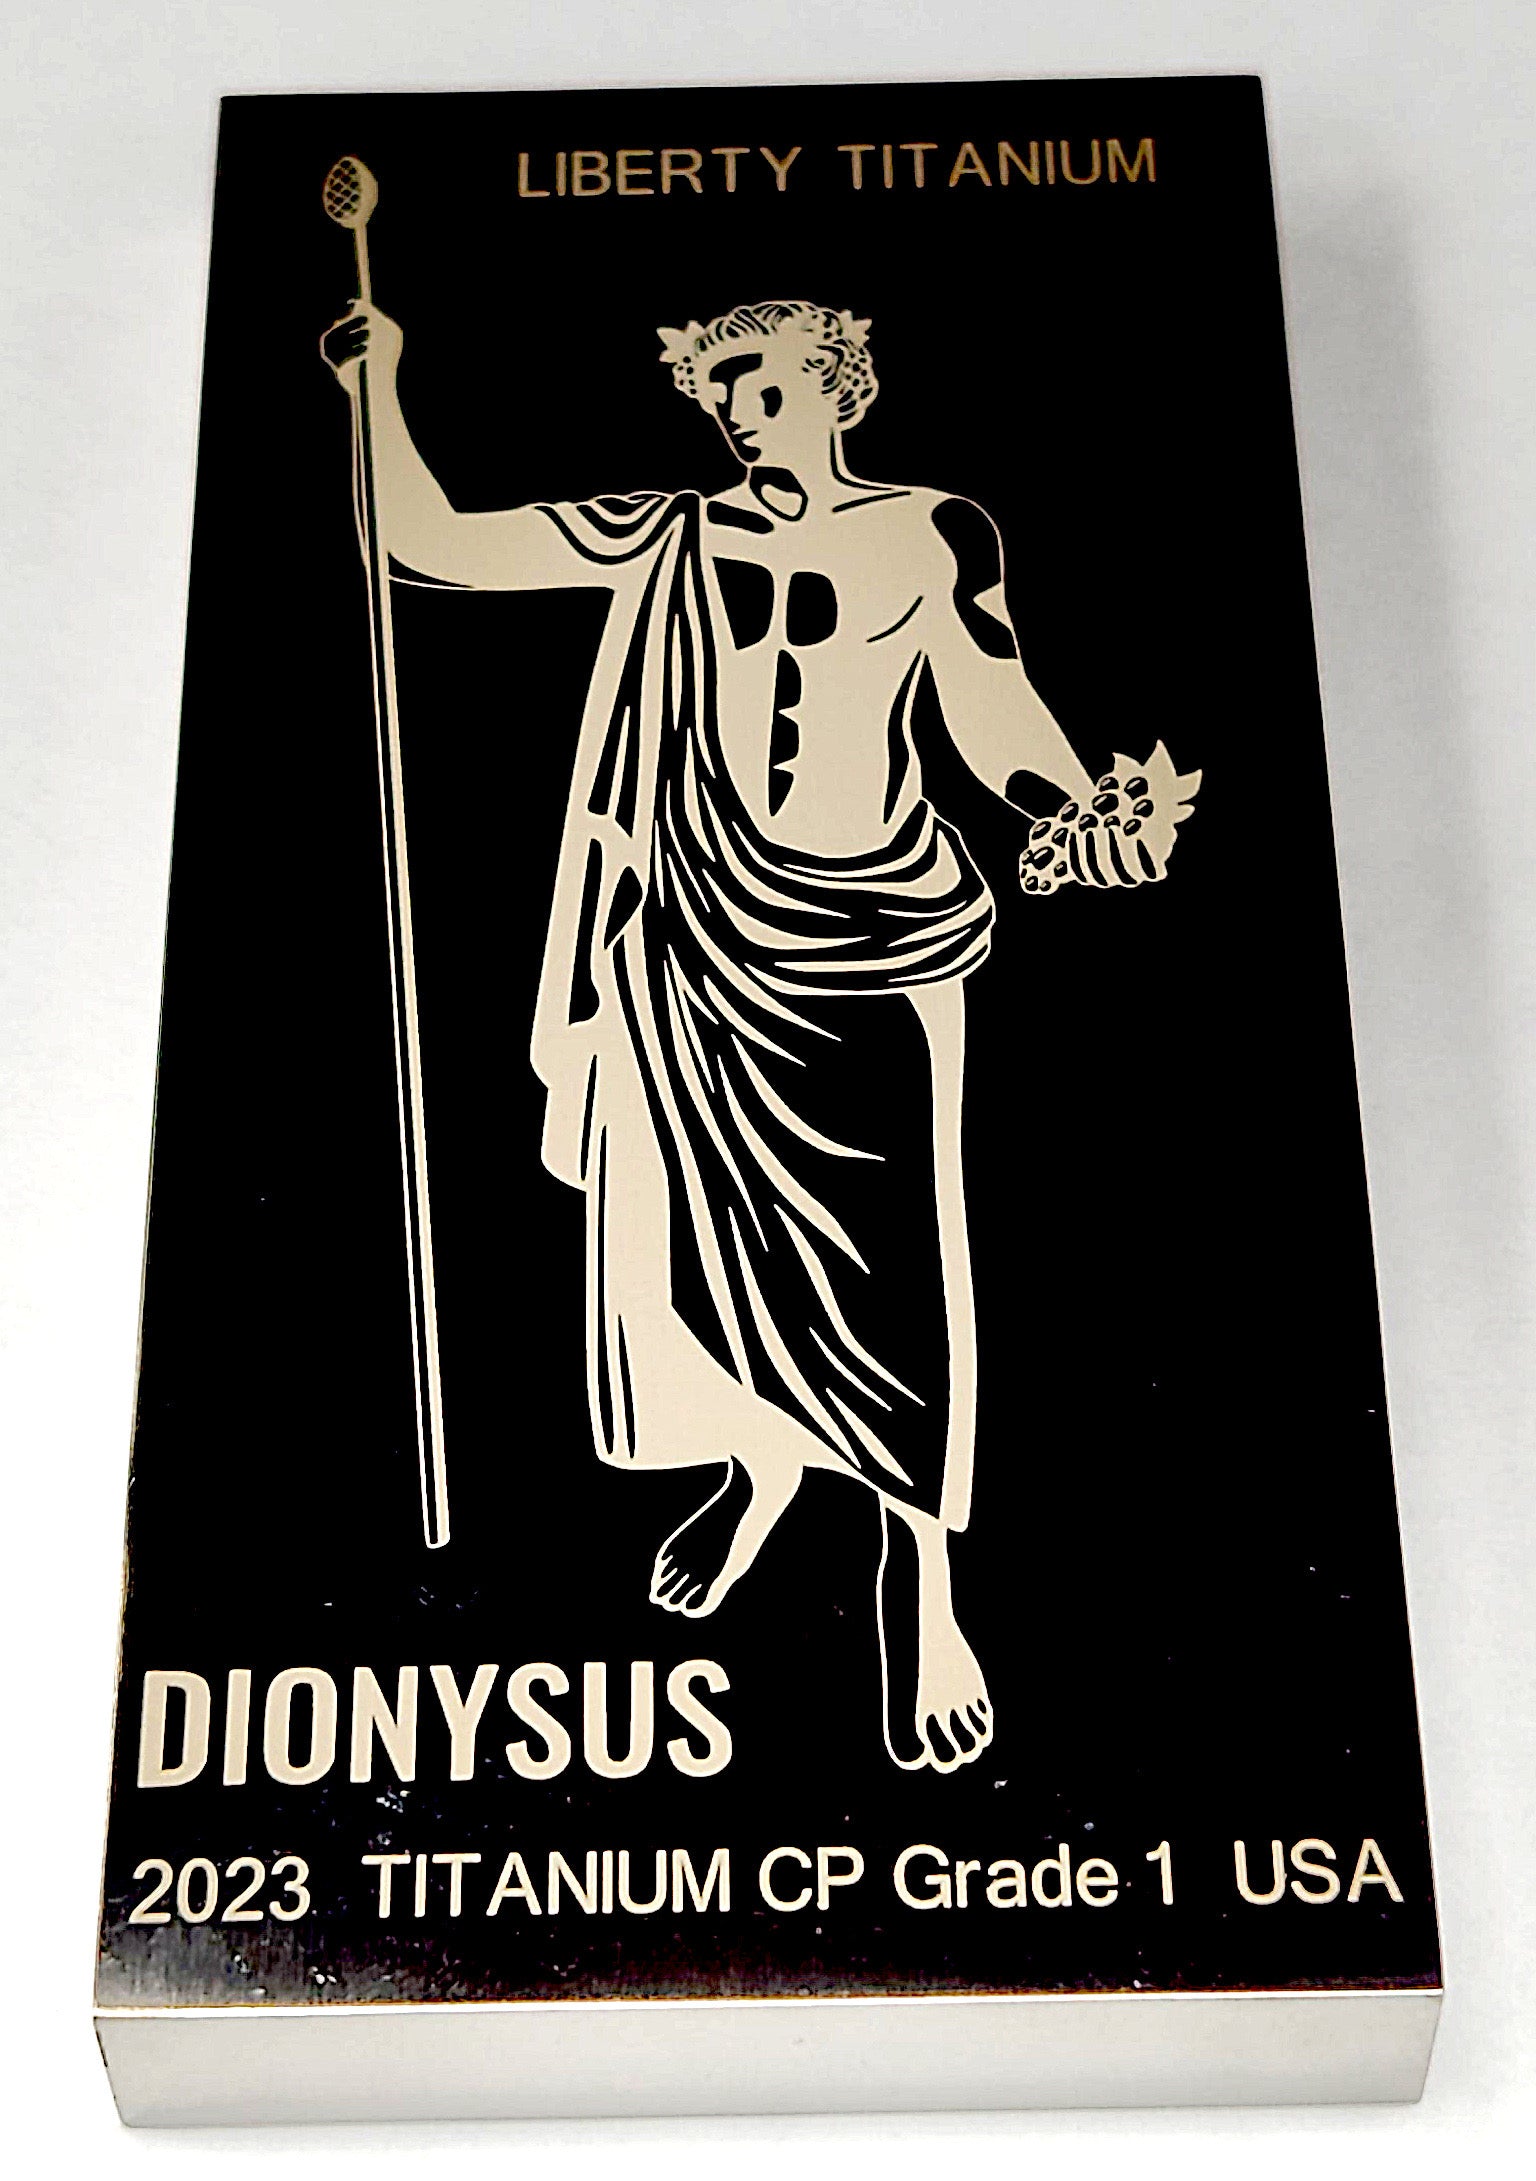 Dionysus 1 lb. Titanium Bullion Bar by Liberty Copper